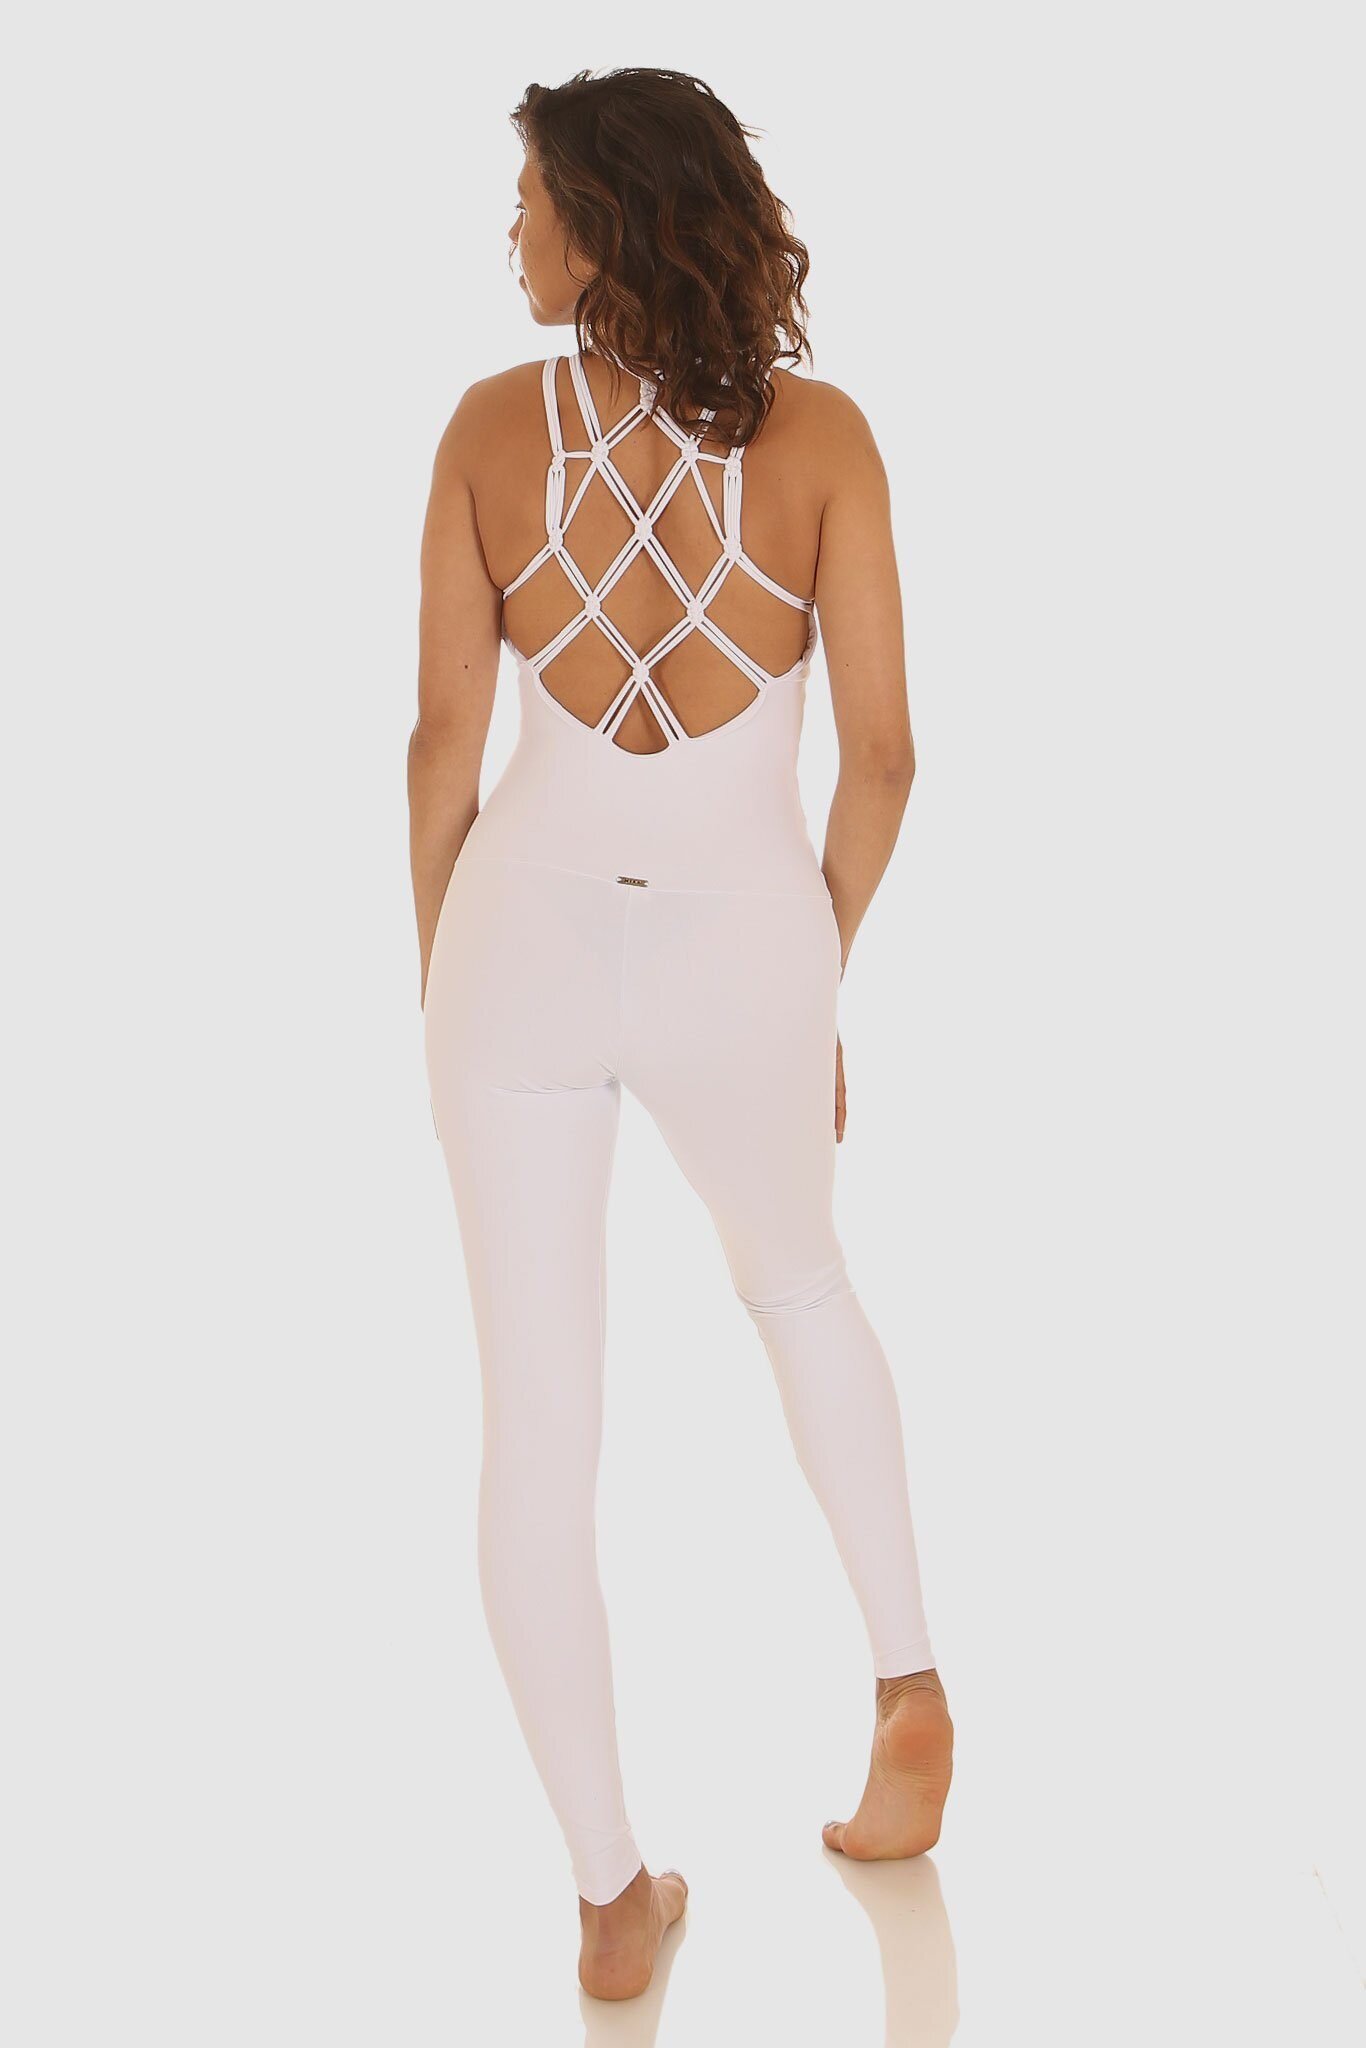 Mika-Yoga-Wear-Maria-Bodysuit-White-01_2048x.jpg